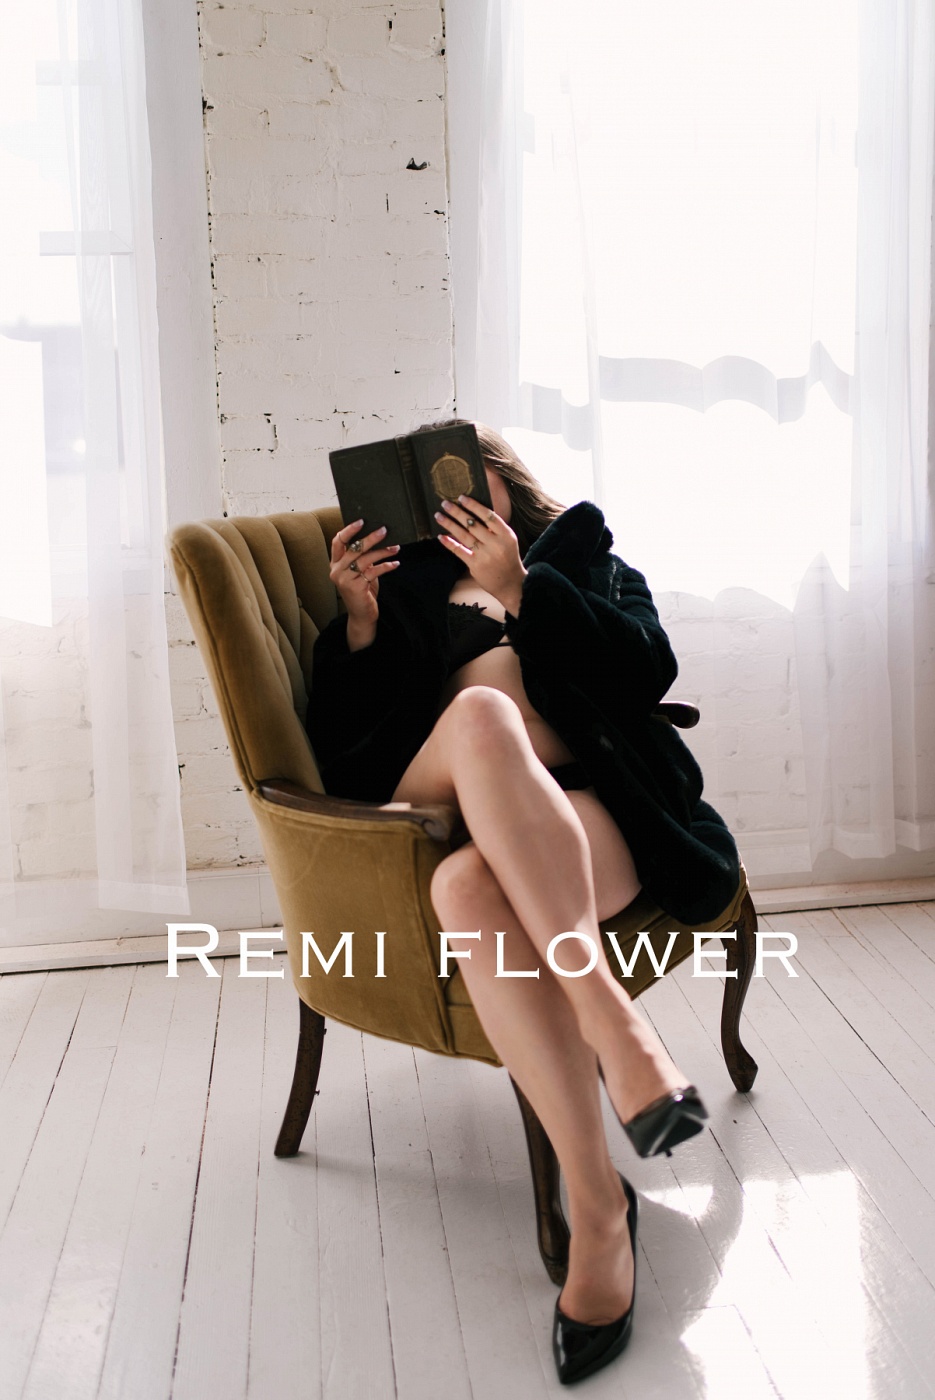 Remi Flower